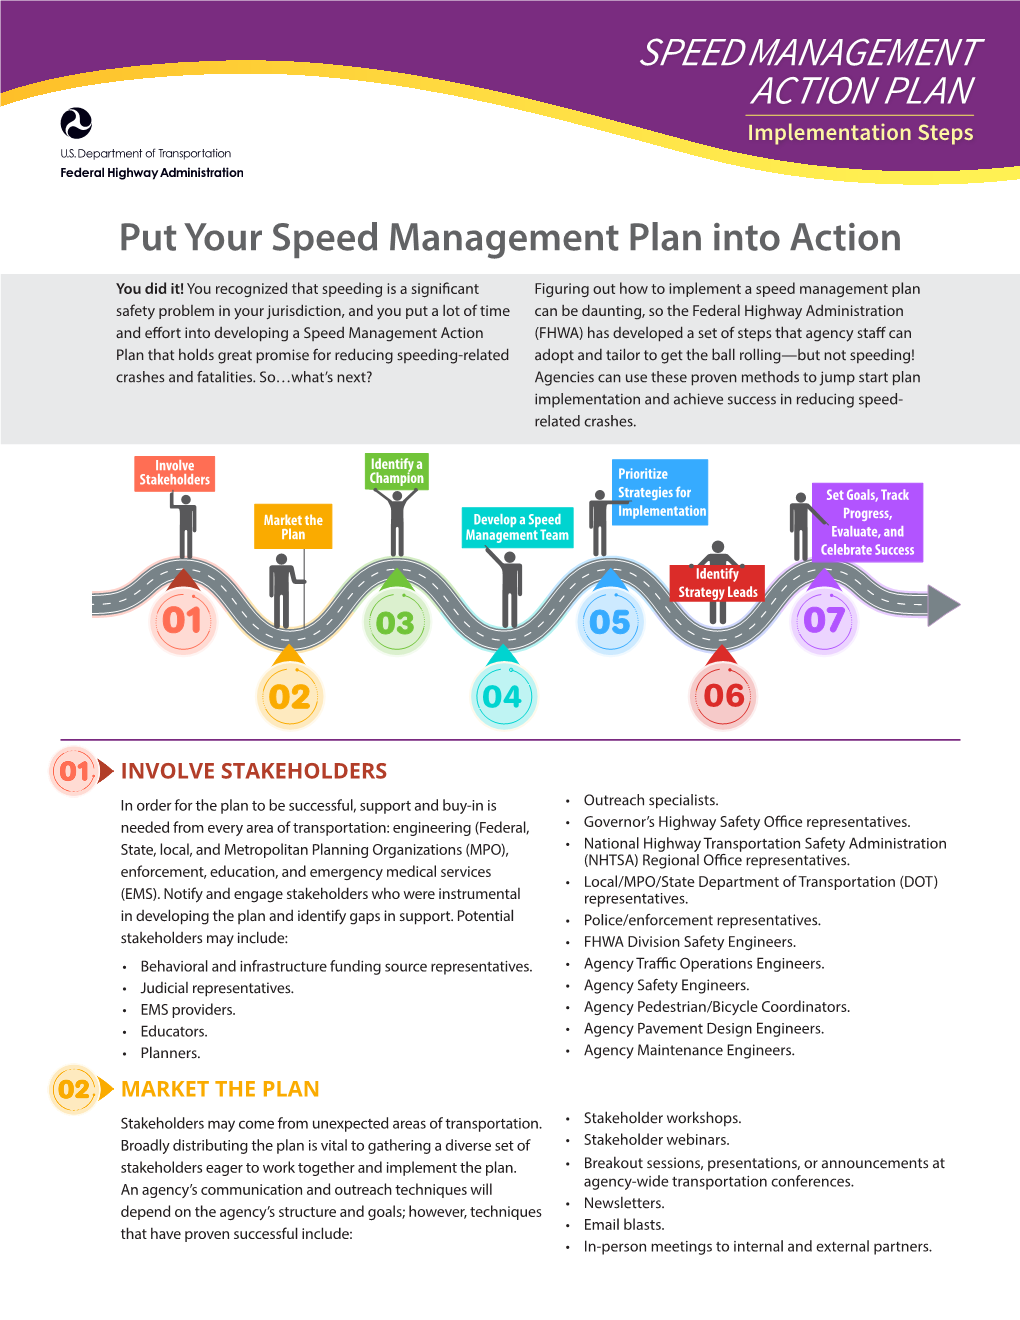 SPEED MANAGEMENT ACTION PLAN Implementation Steps